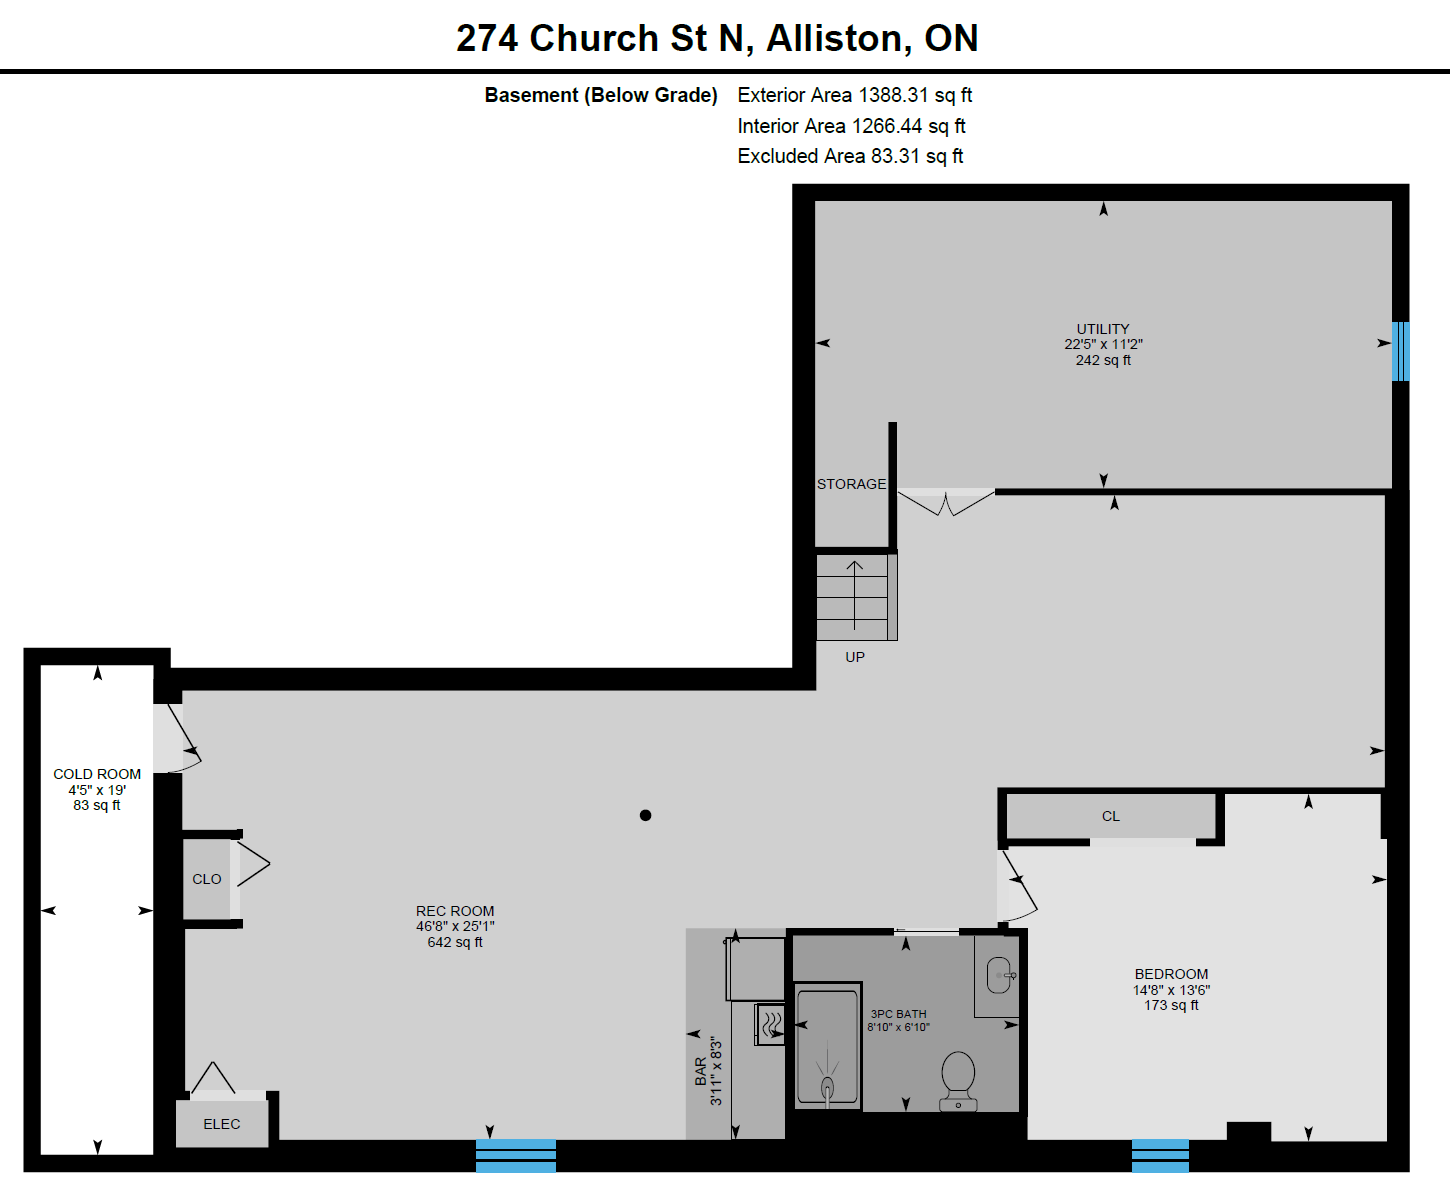 a floor plan for 274 church st n. alliston ontario